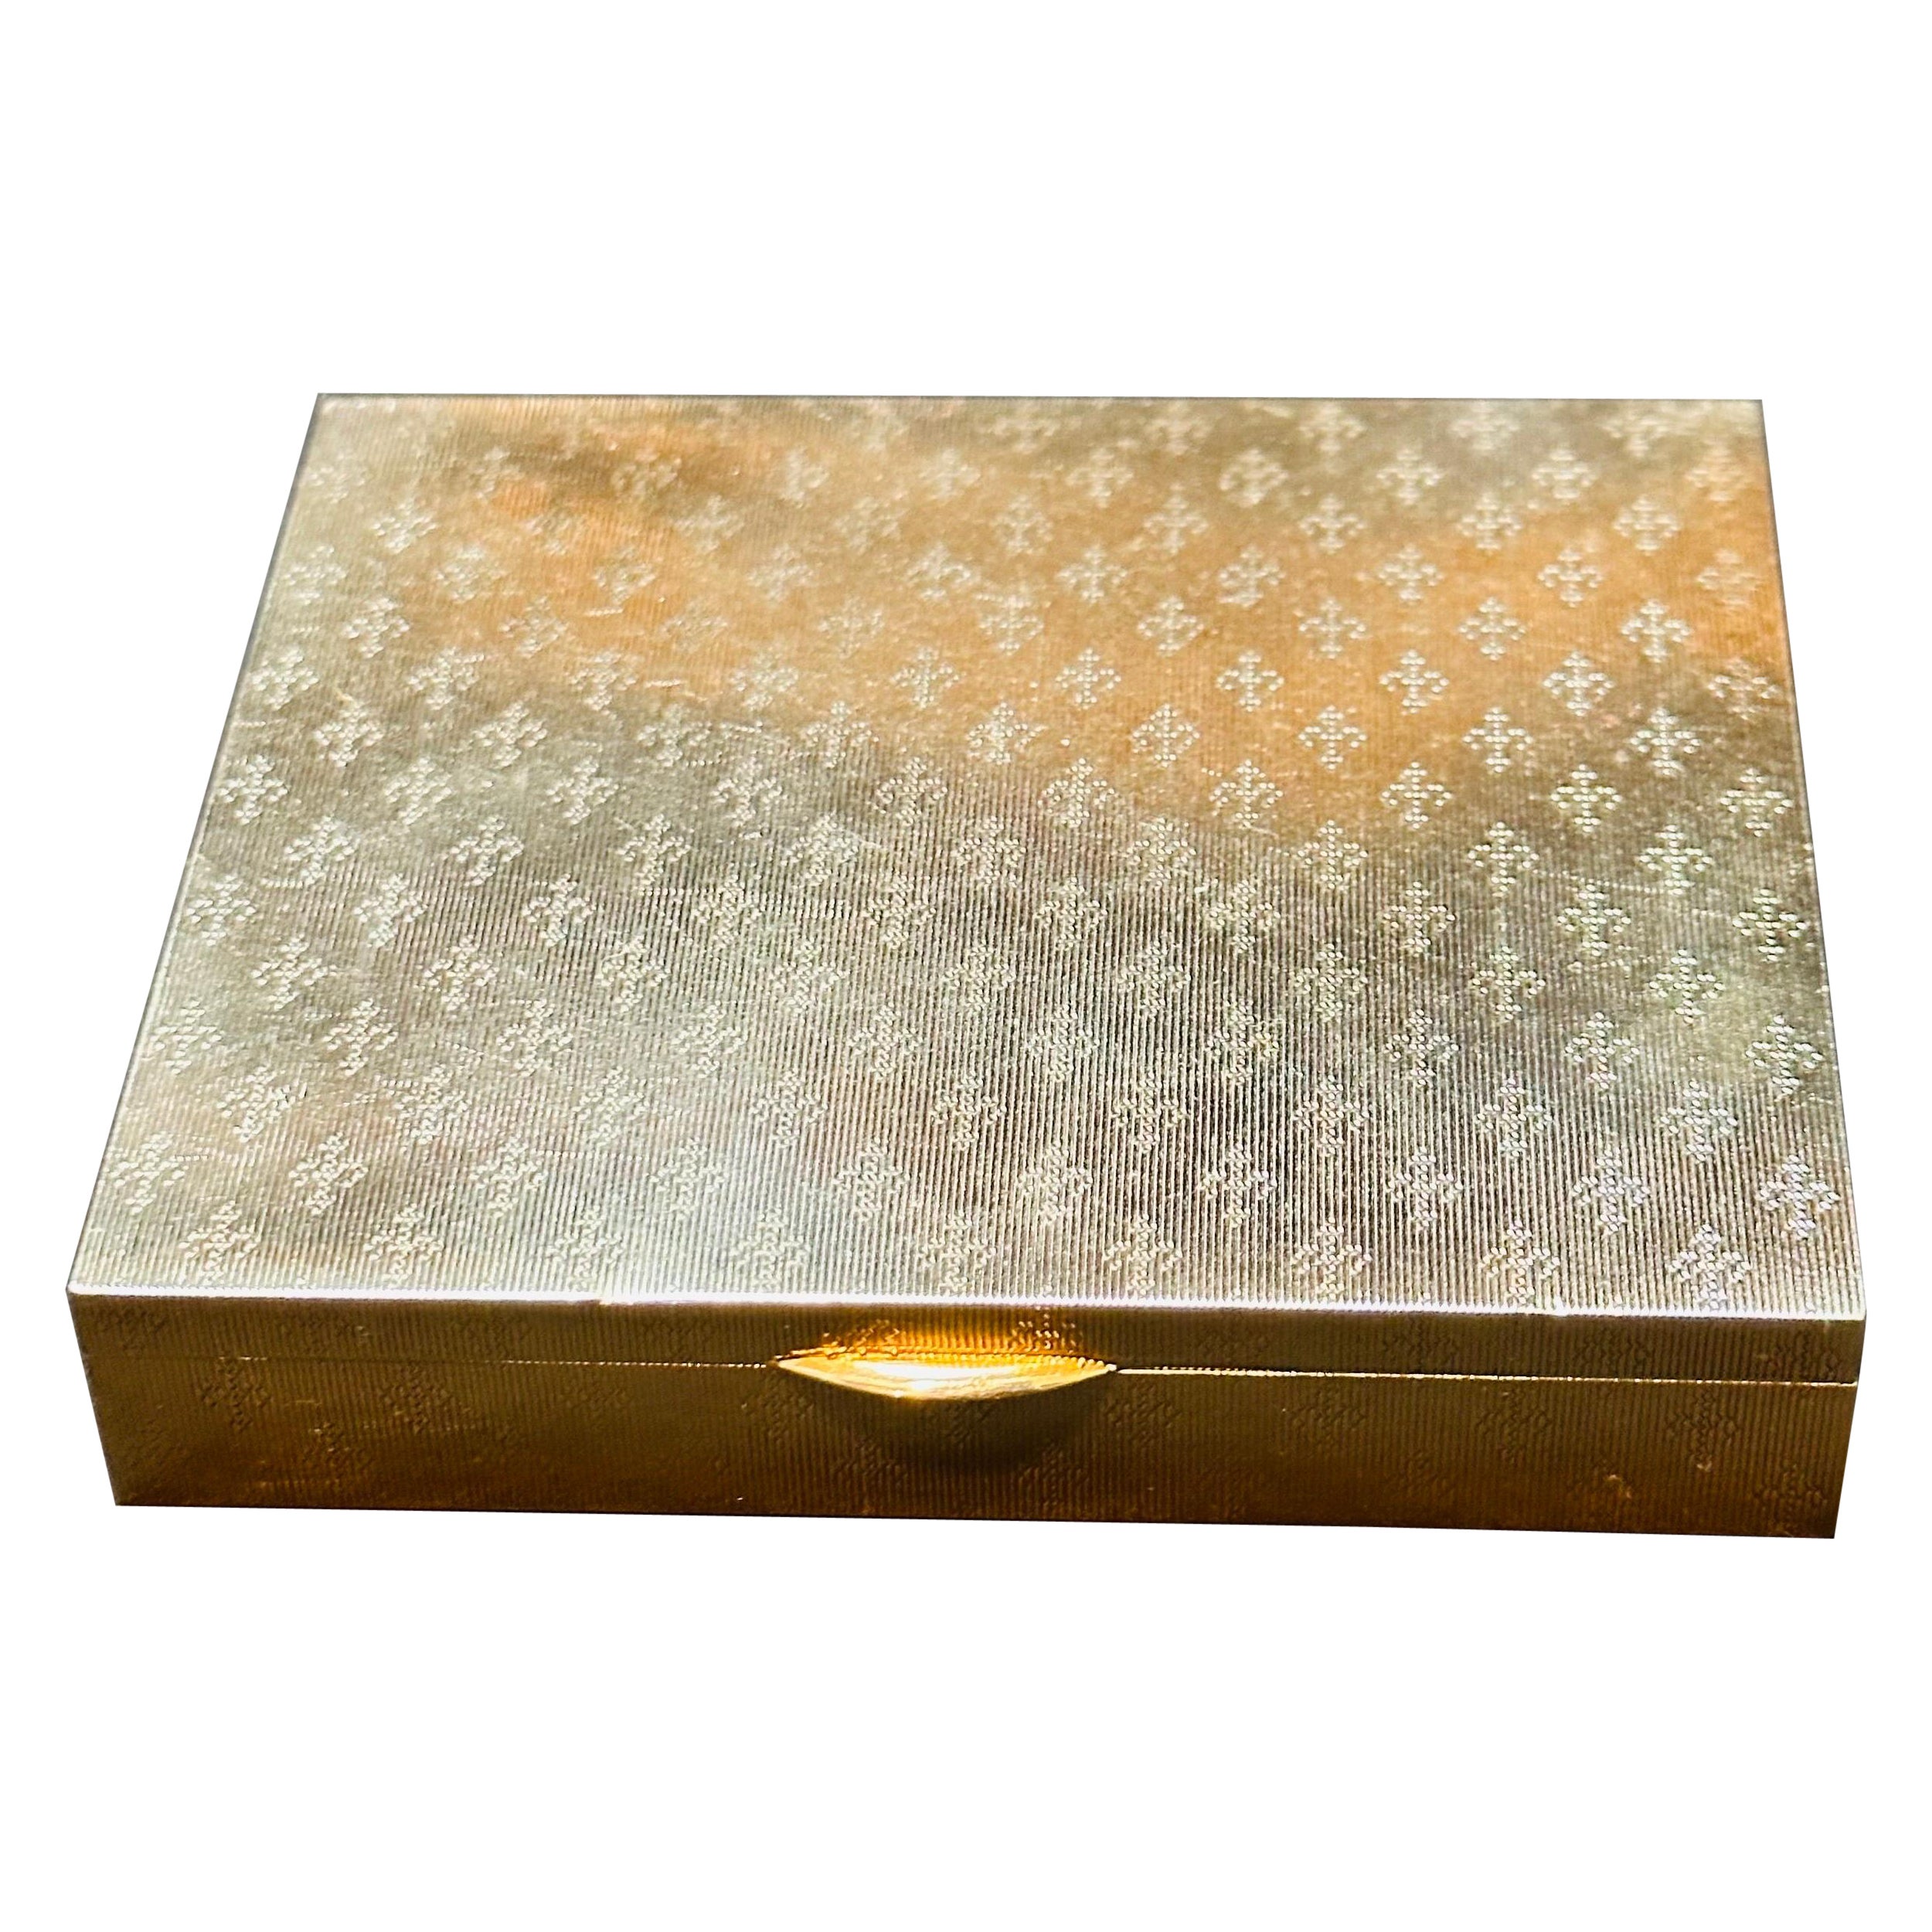 Cartier Gold Compact Powder Box 14 Karat Gold Make-Up Compact 114 Gm